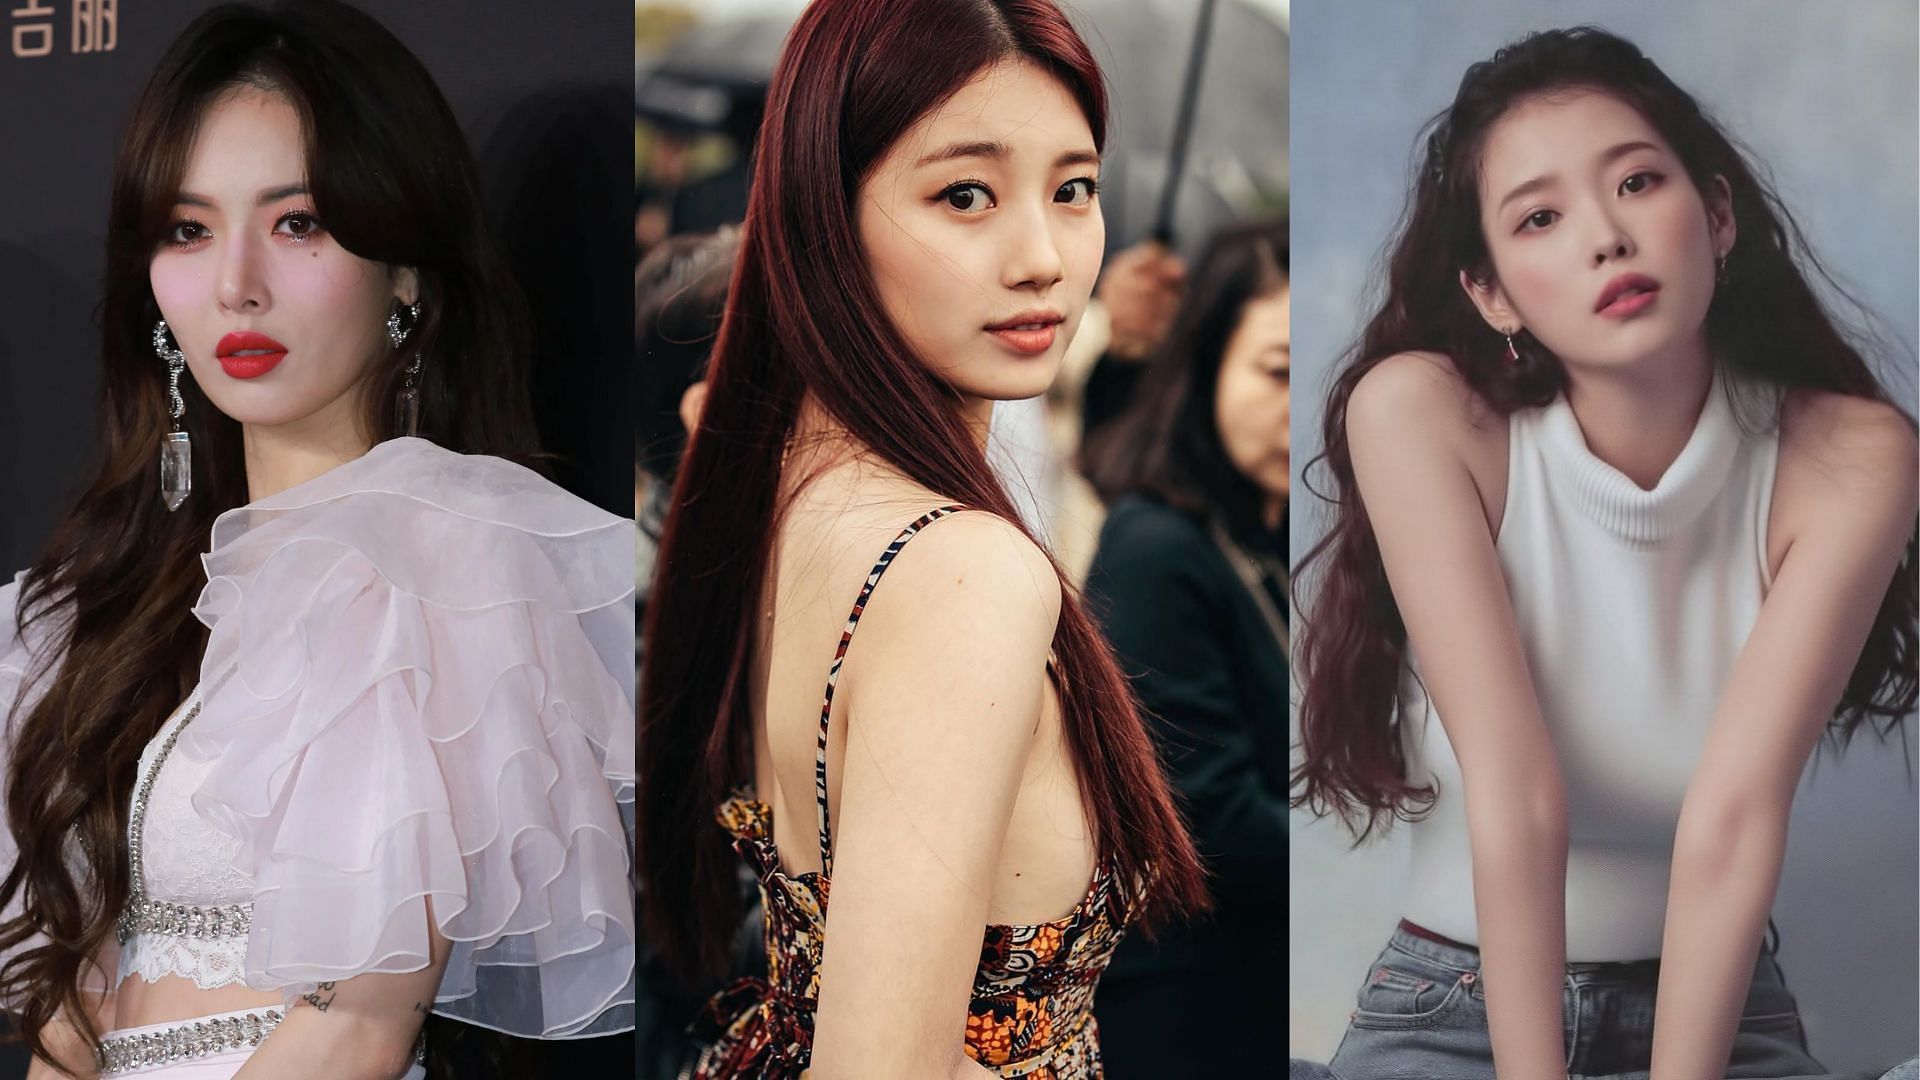 Youngest female K-pop idols at debut: HyunA, Suzy, and IU (Image via P NATION, Management SOOP, EDAM)